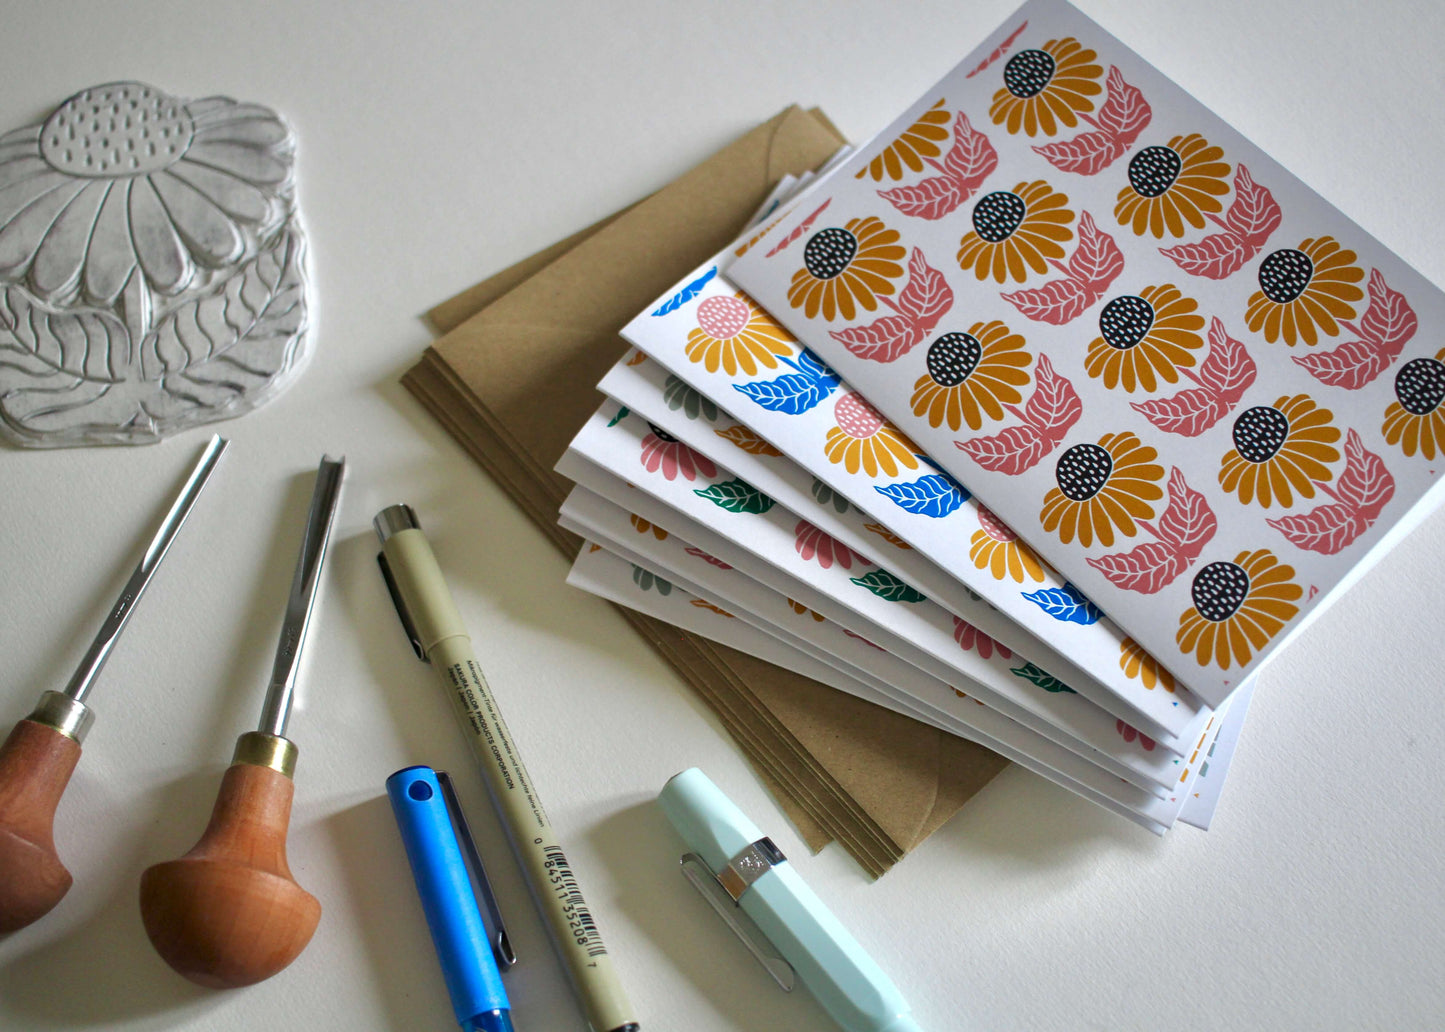 Cone Flower Block Print Notecards - Set of 8